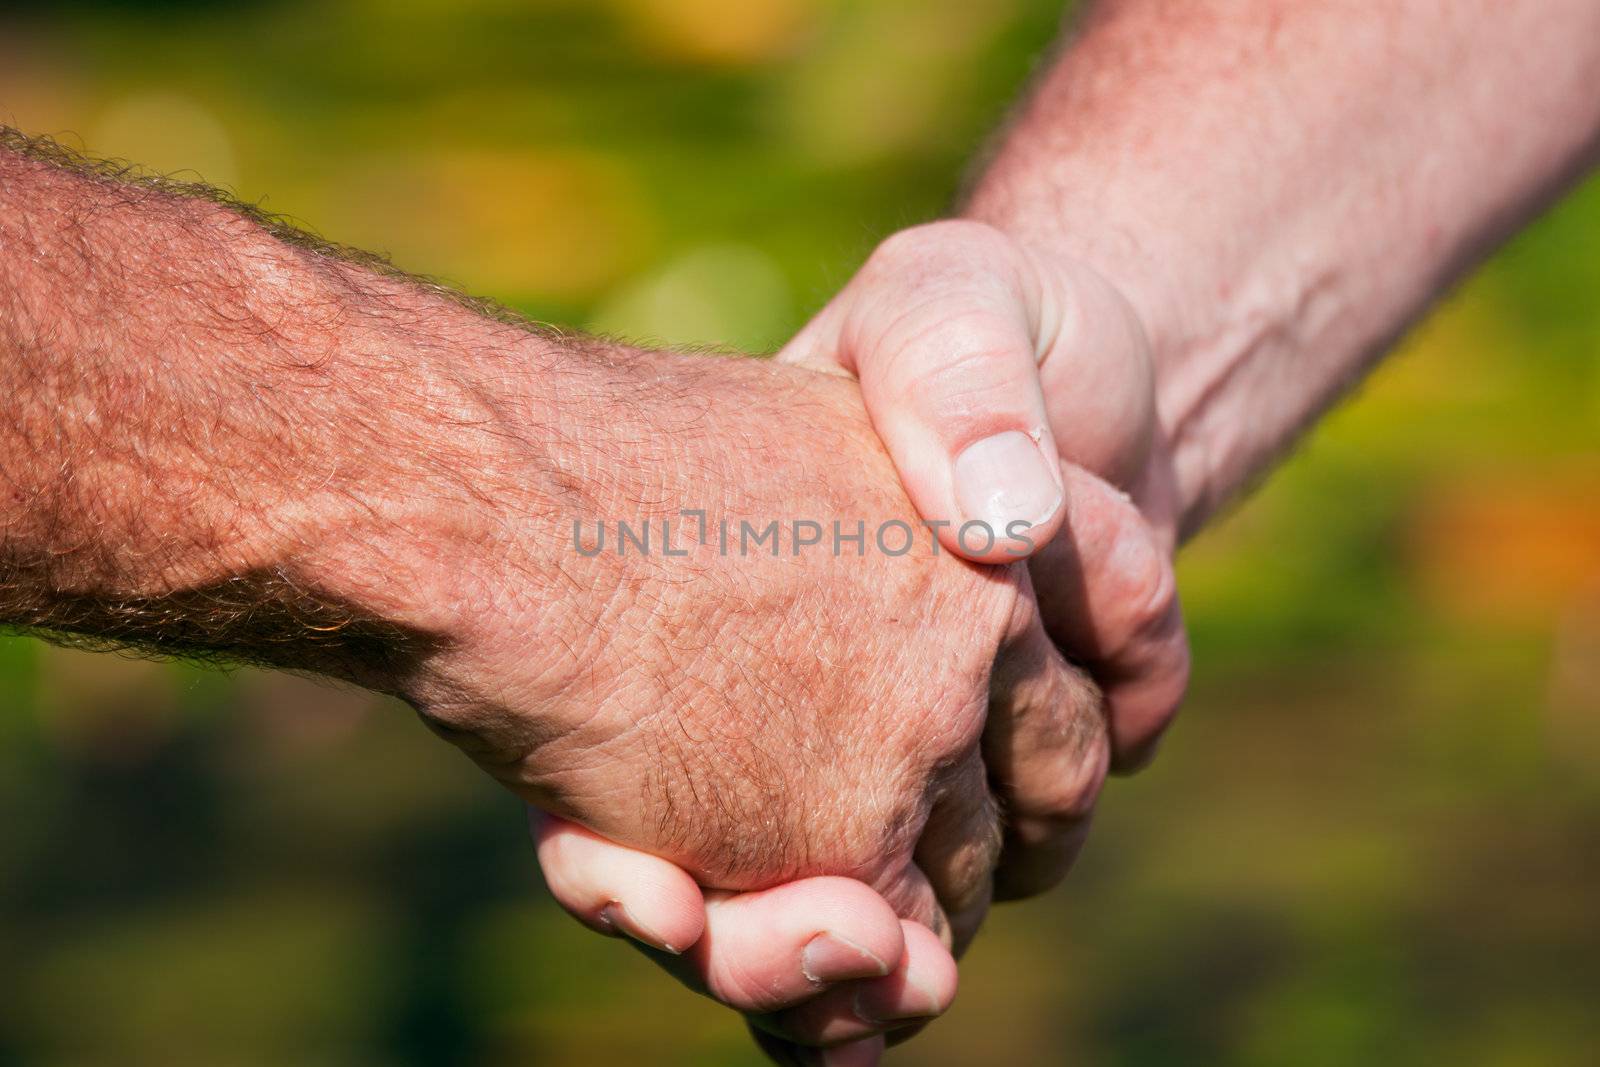 Firm handshake between two men by Jaykayl